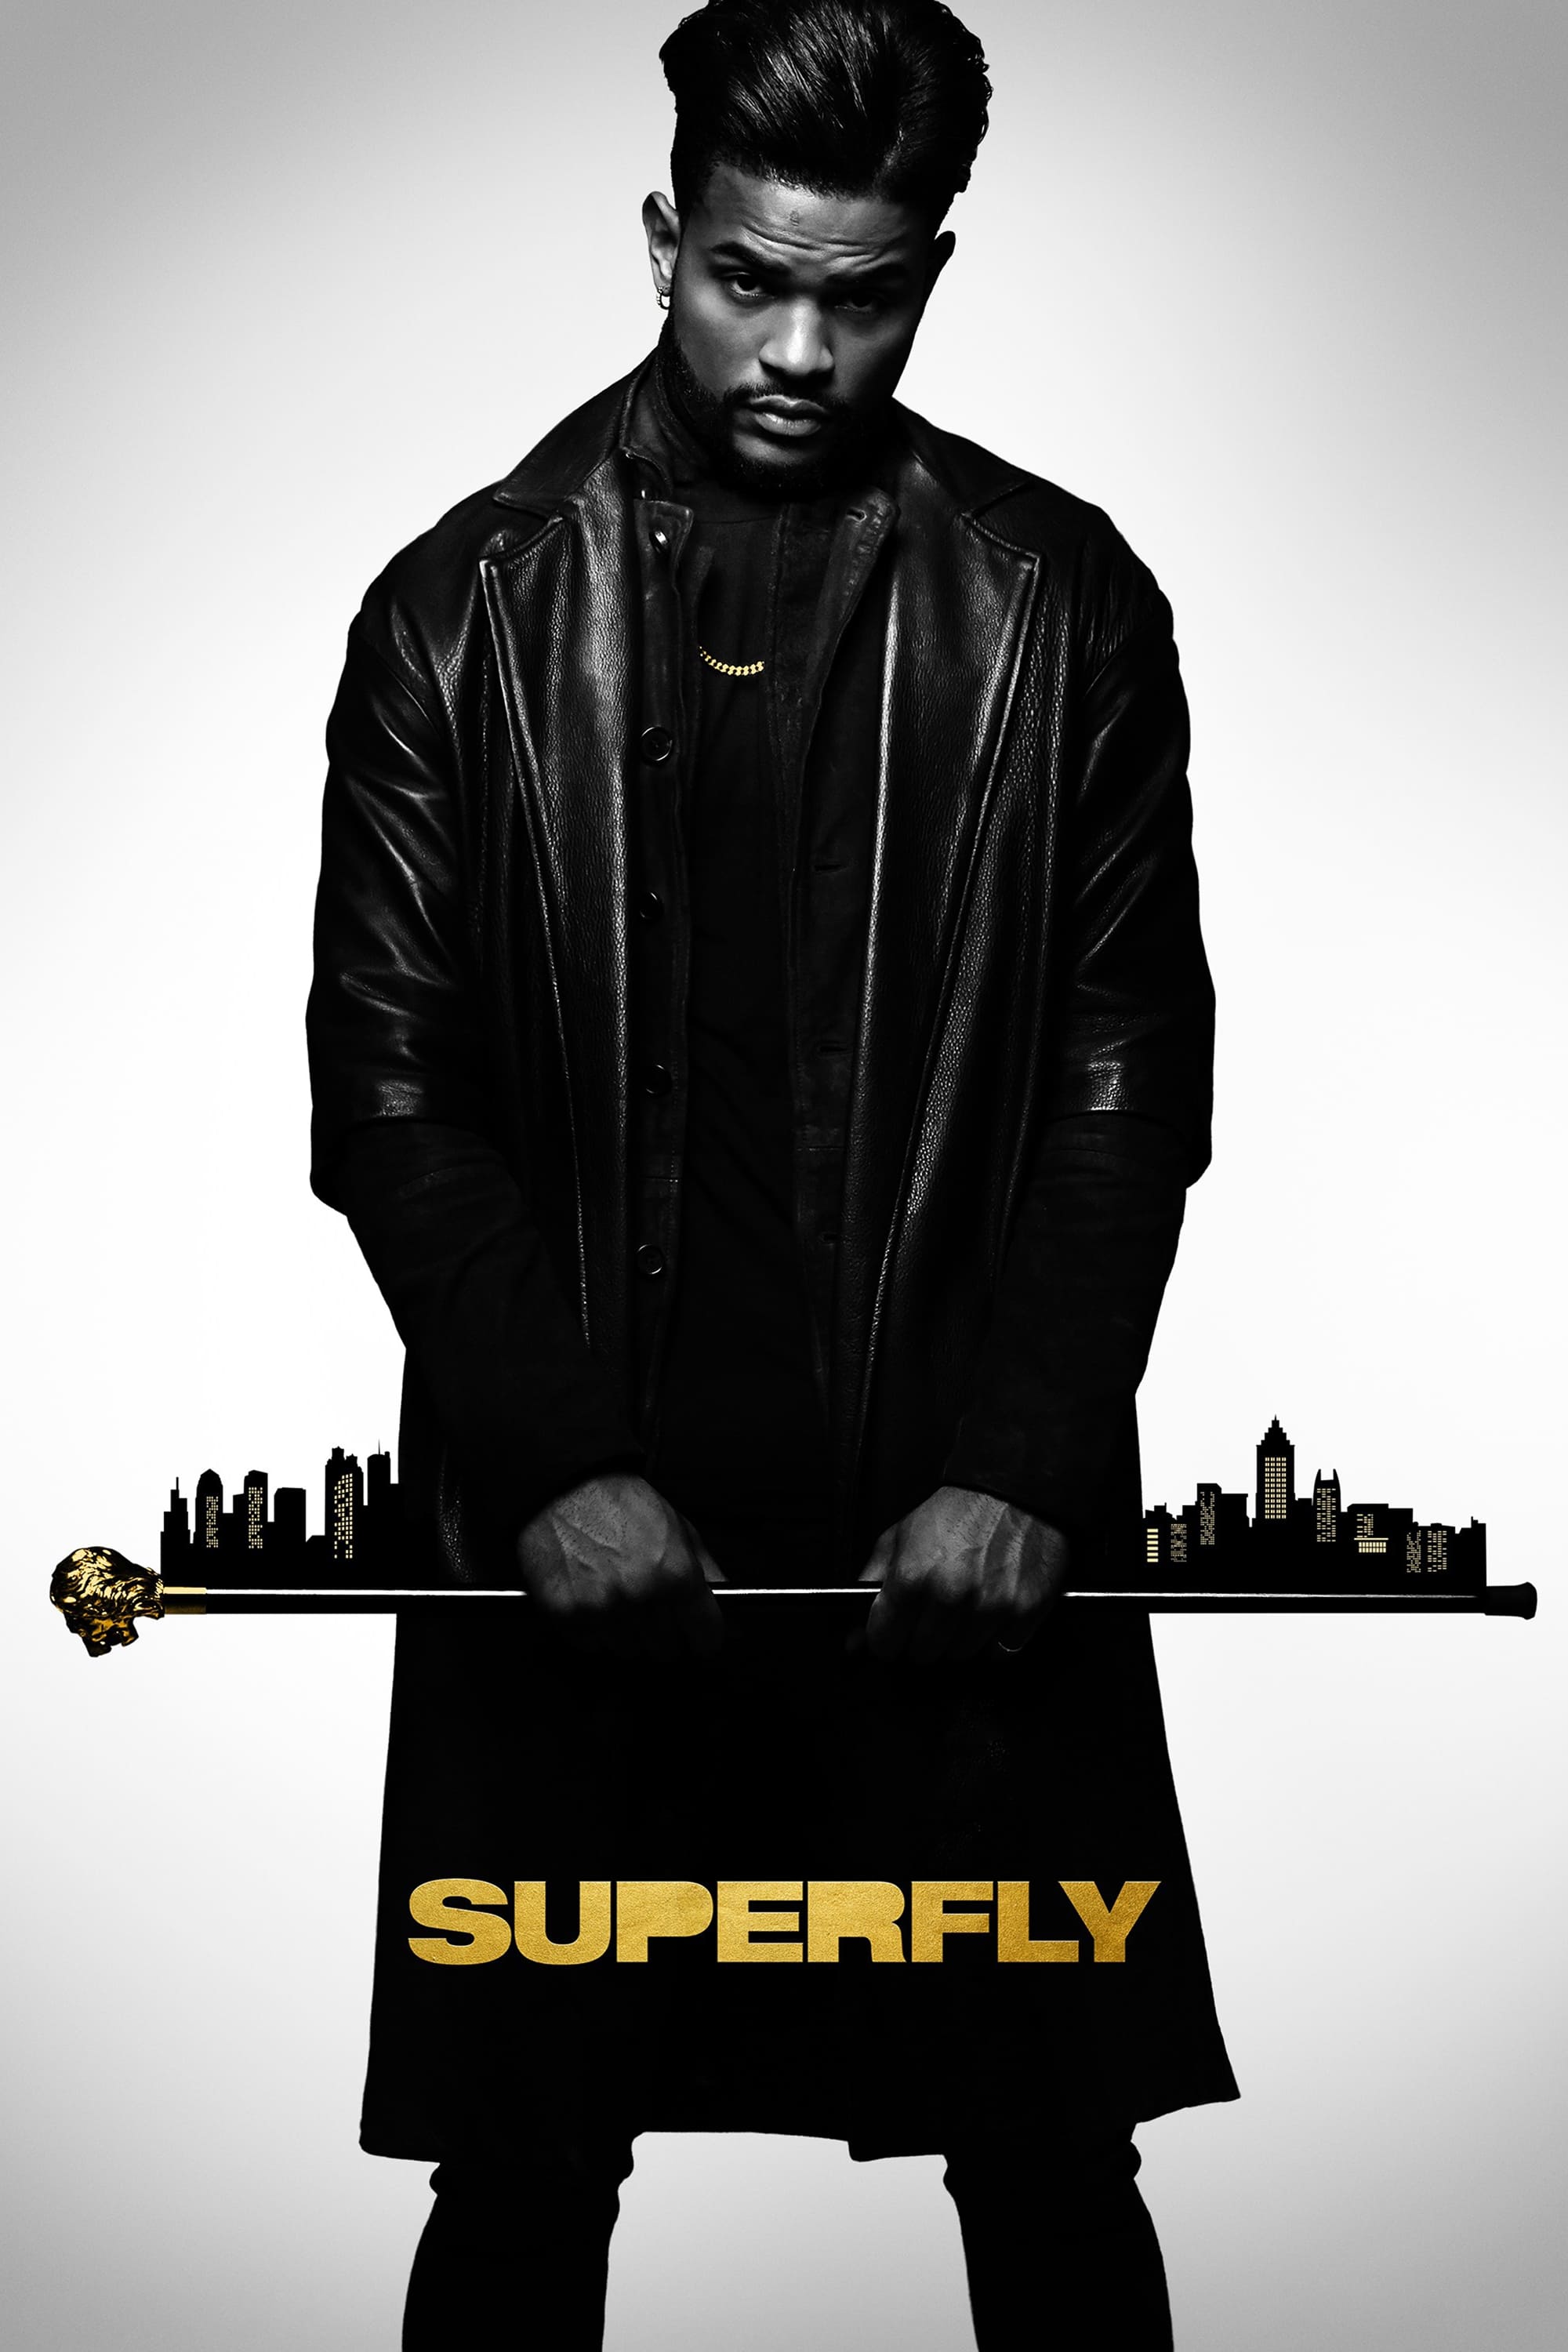 Superfly: Crime e Poder